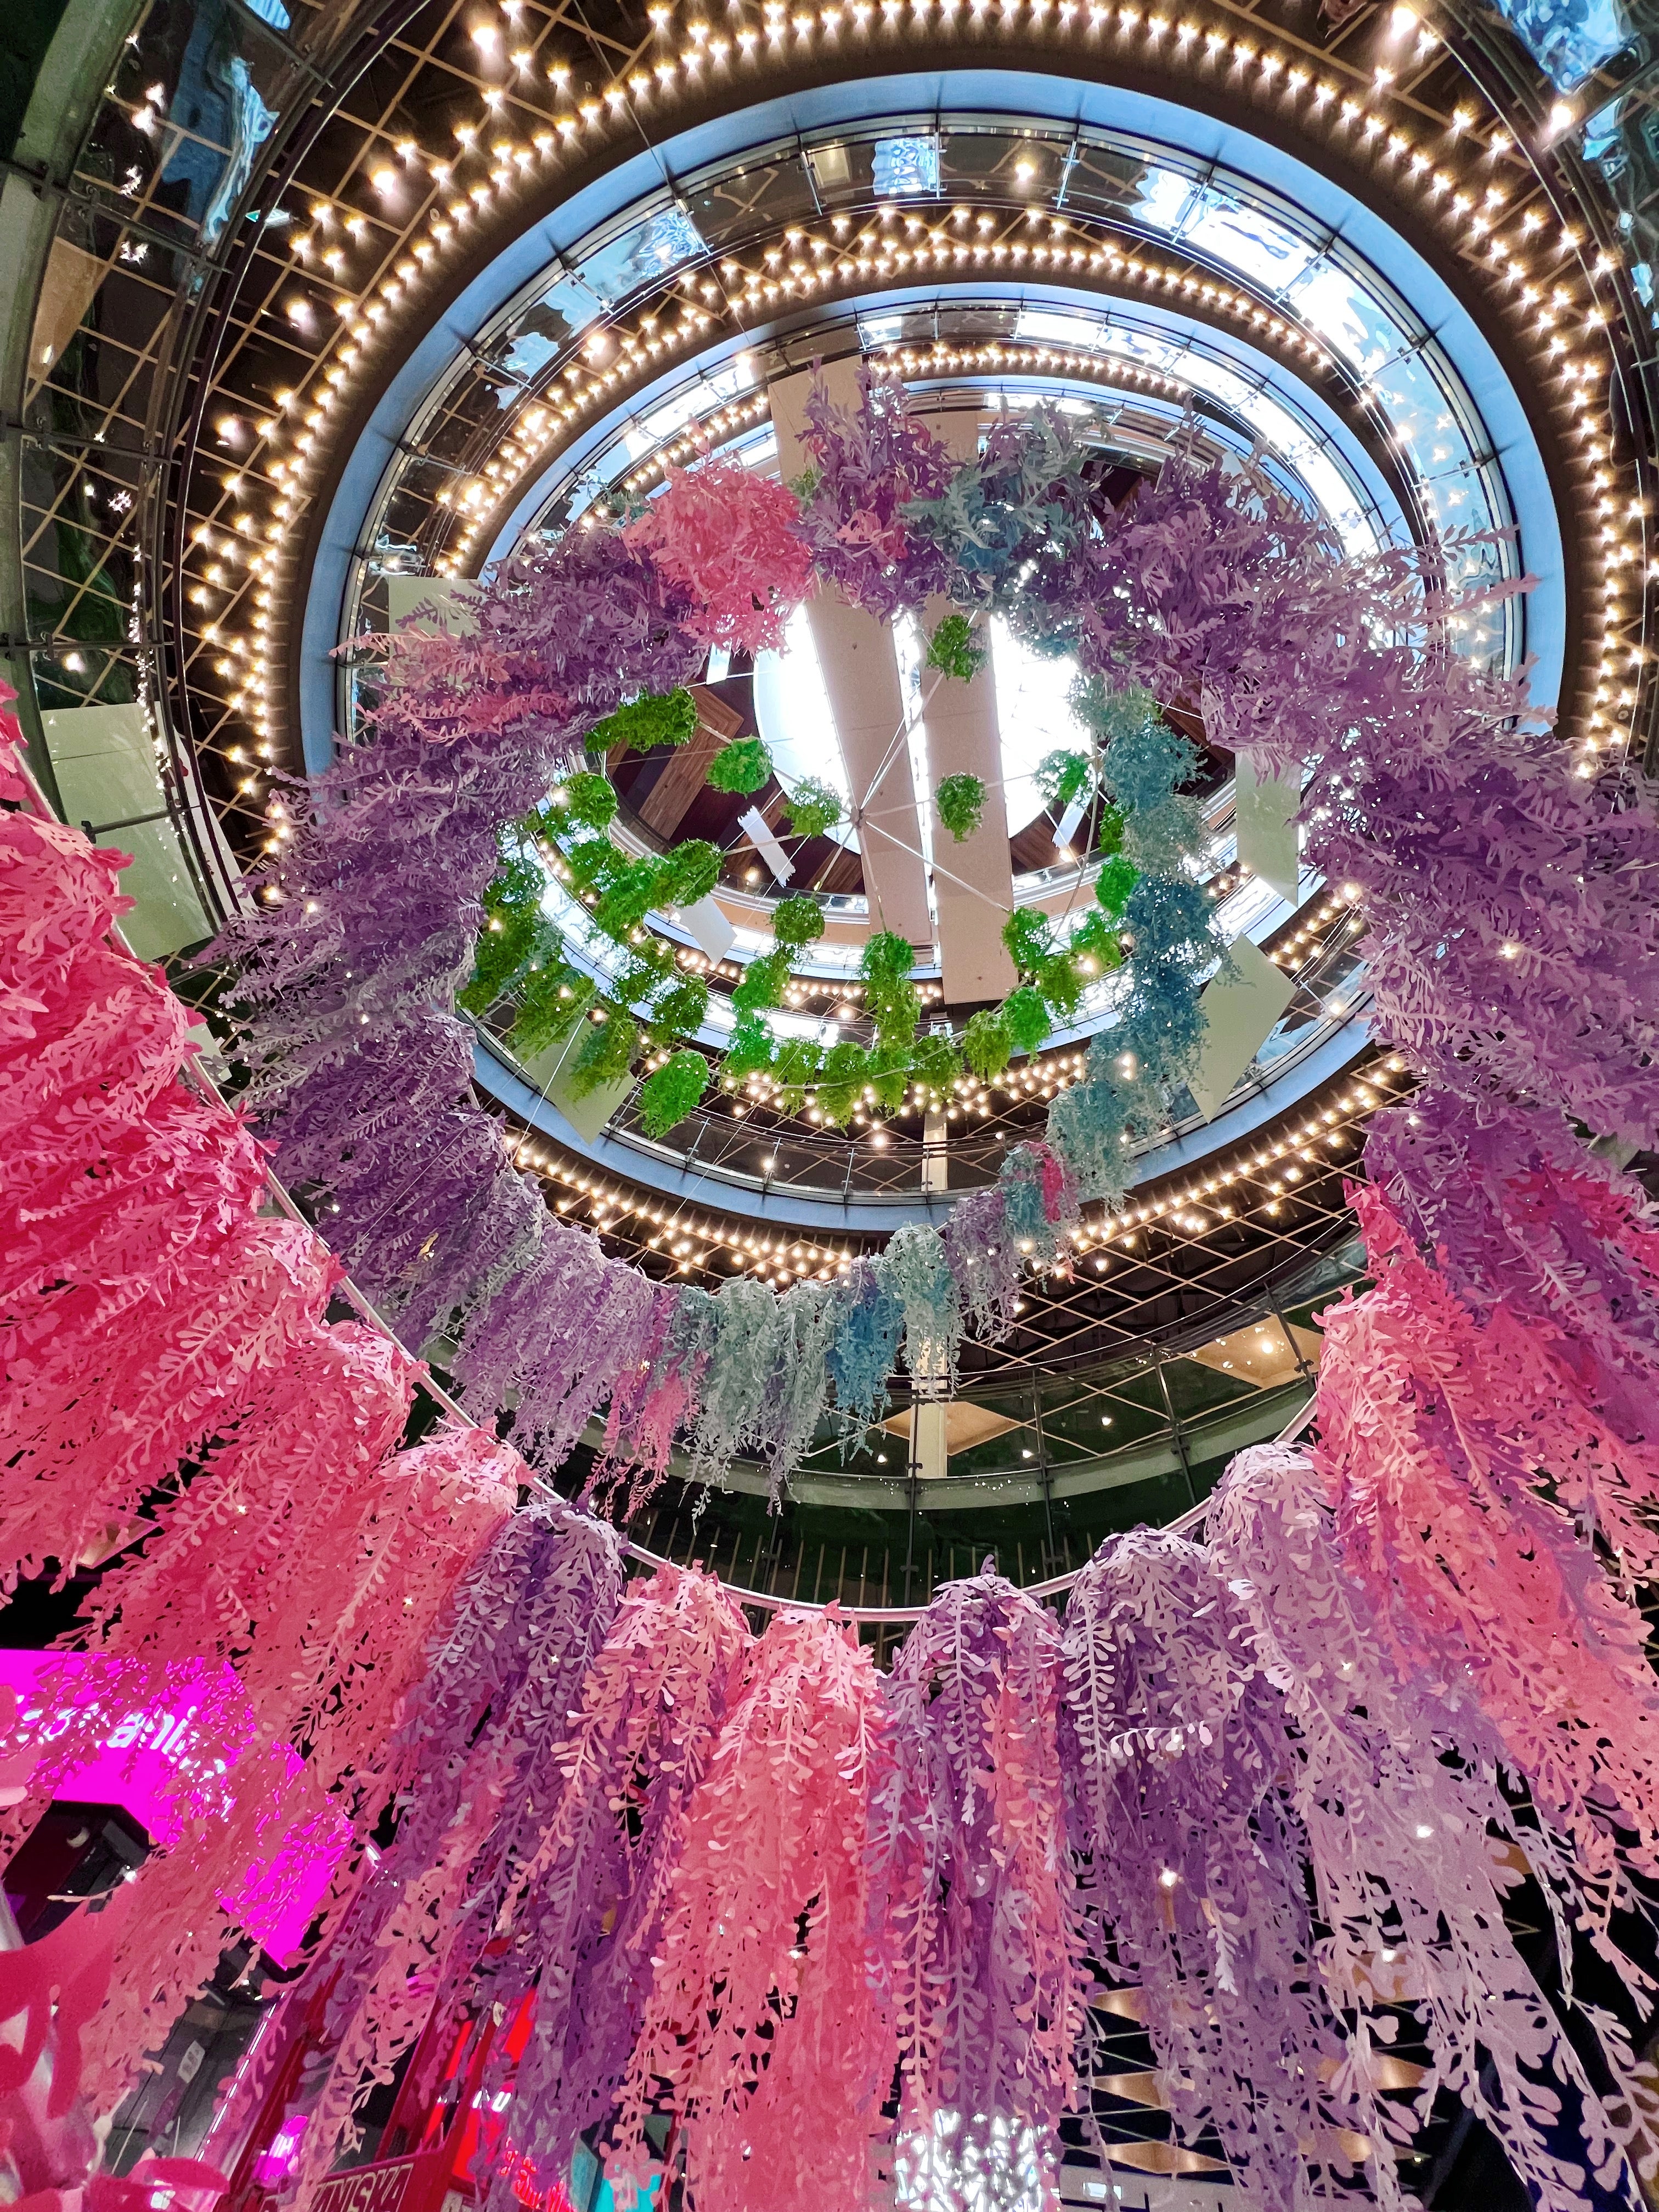 Enchanting Spiral of Colors: Kammpi Shopping Center's 50-meter Hanging Art Installation